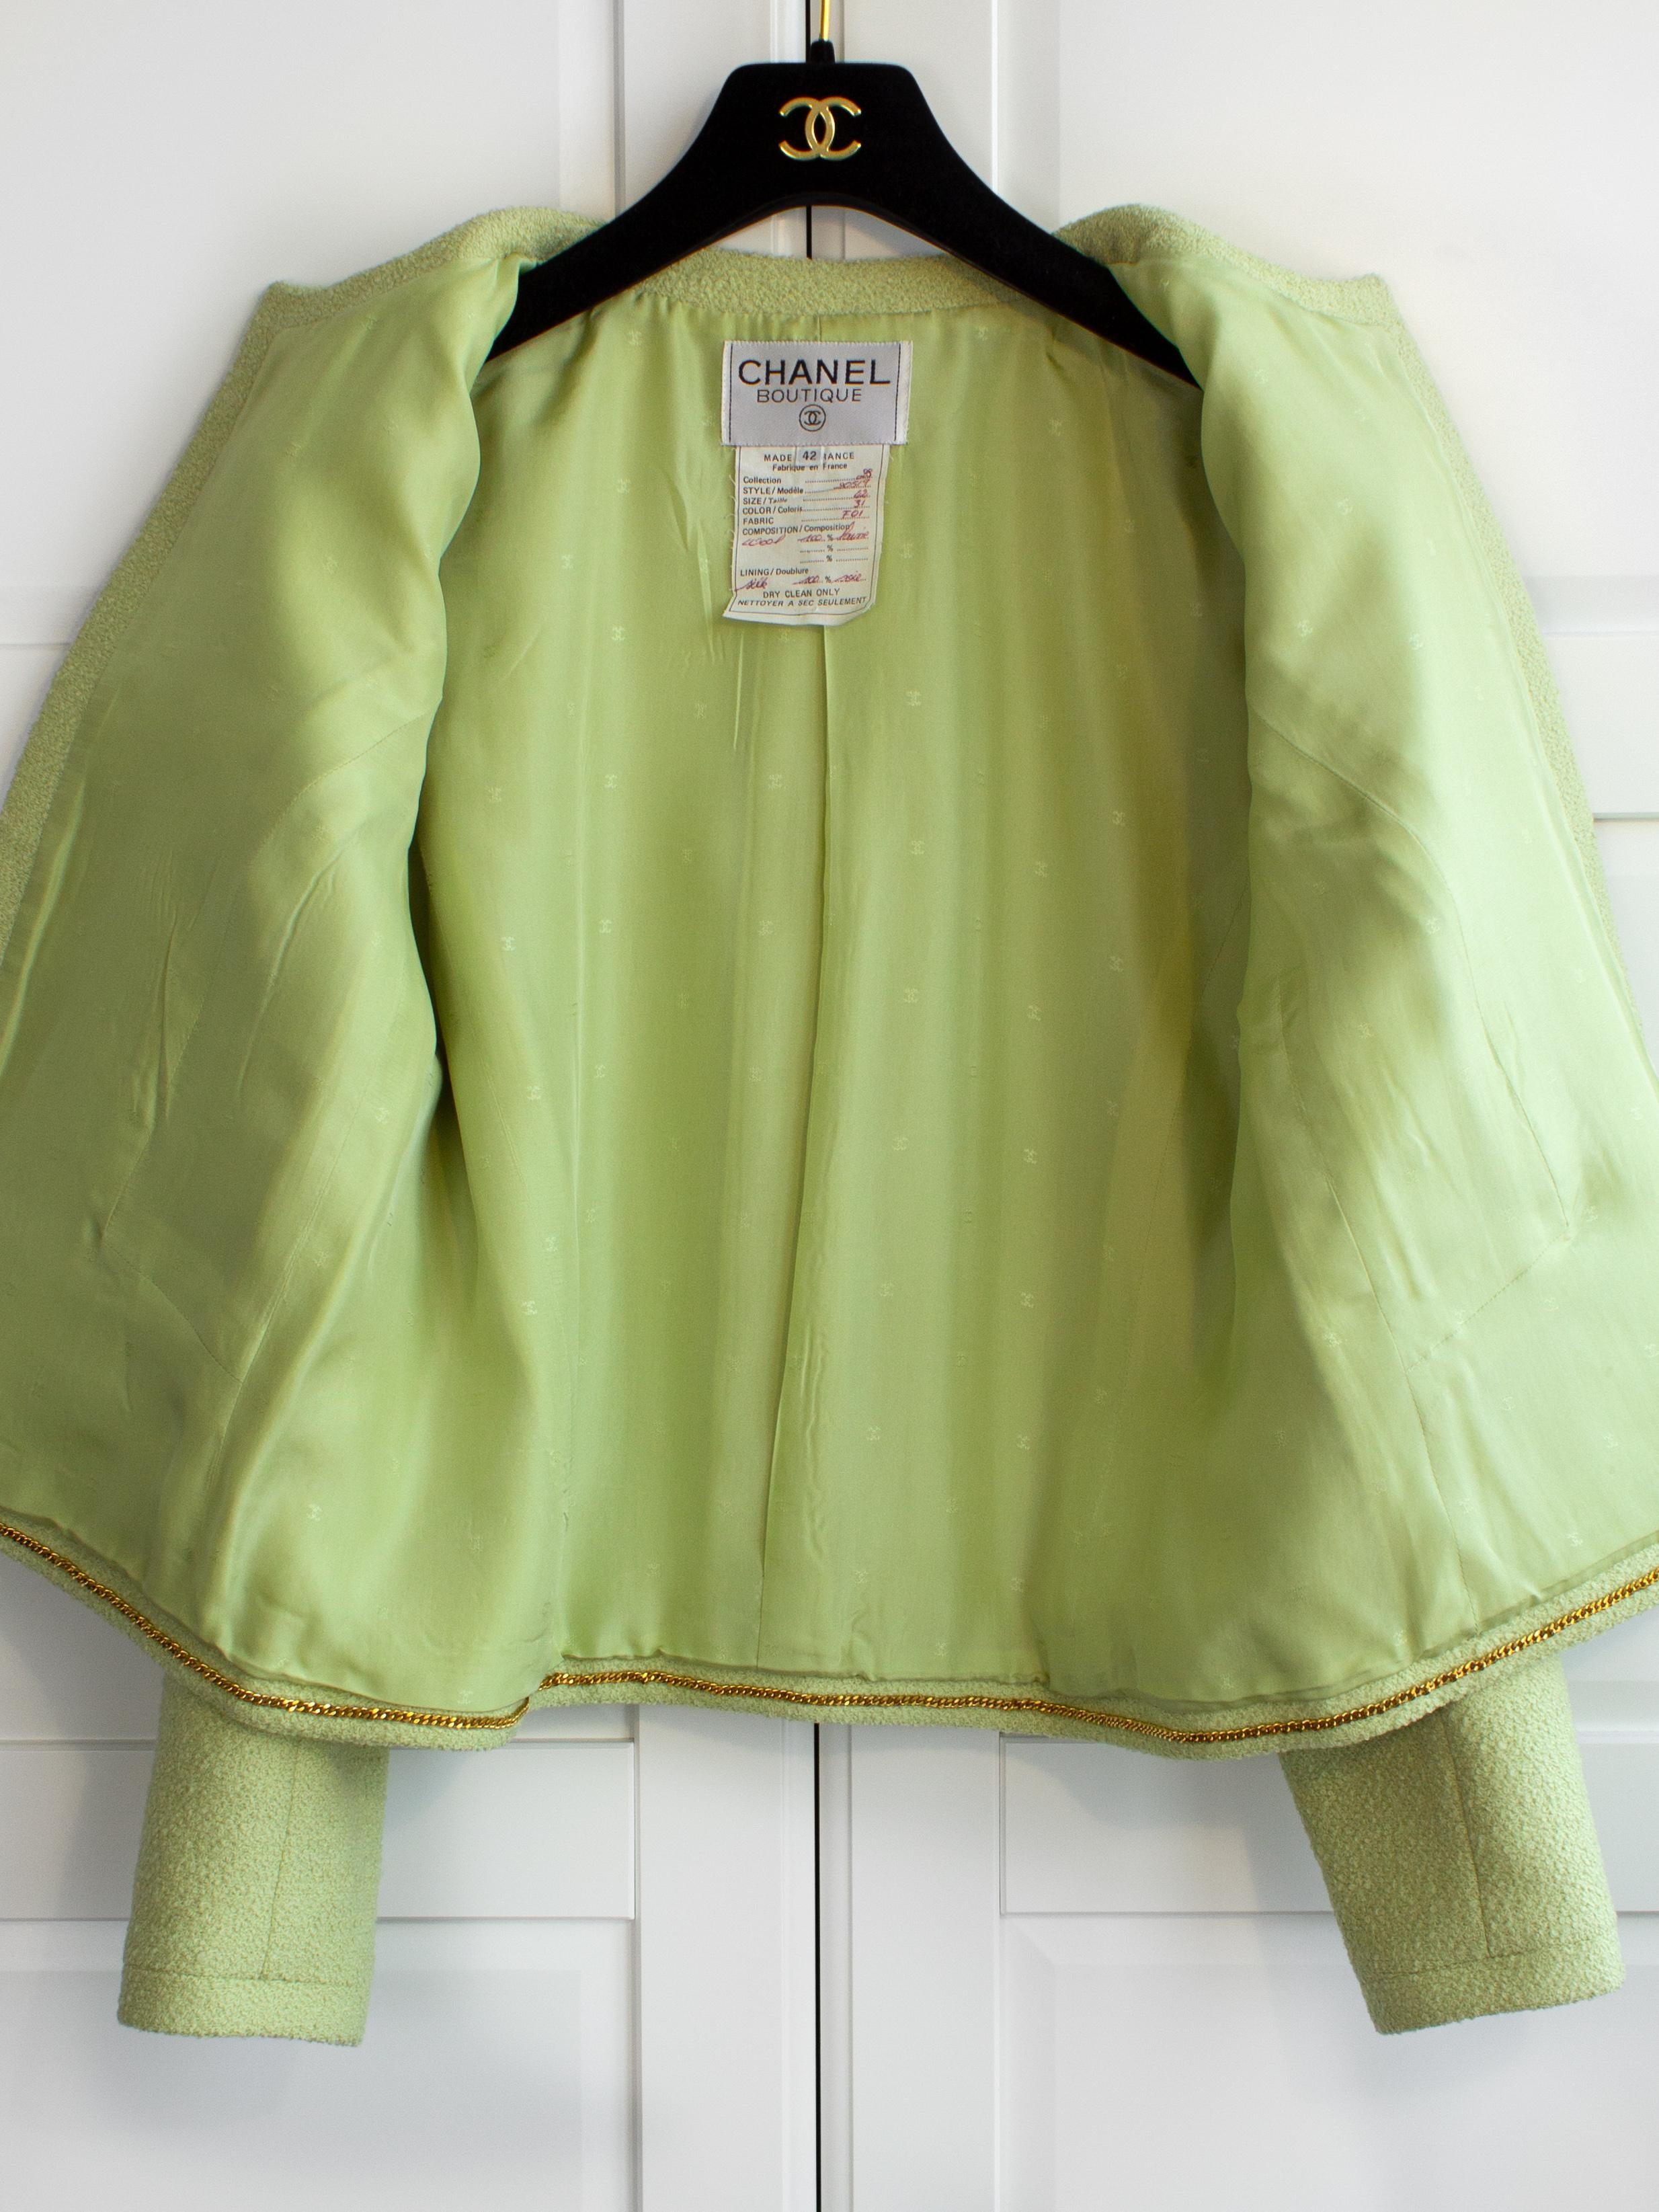 Chanel Vintage Spring/Summer 1992 Green Tweed CC Jacket Skirt Suit For Sale 7